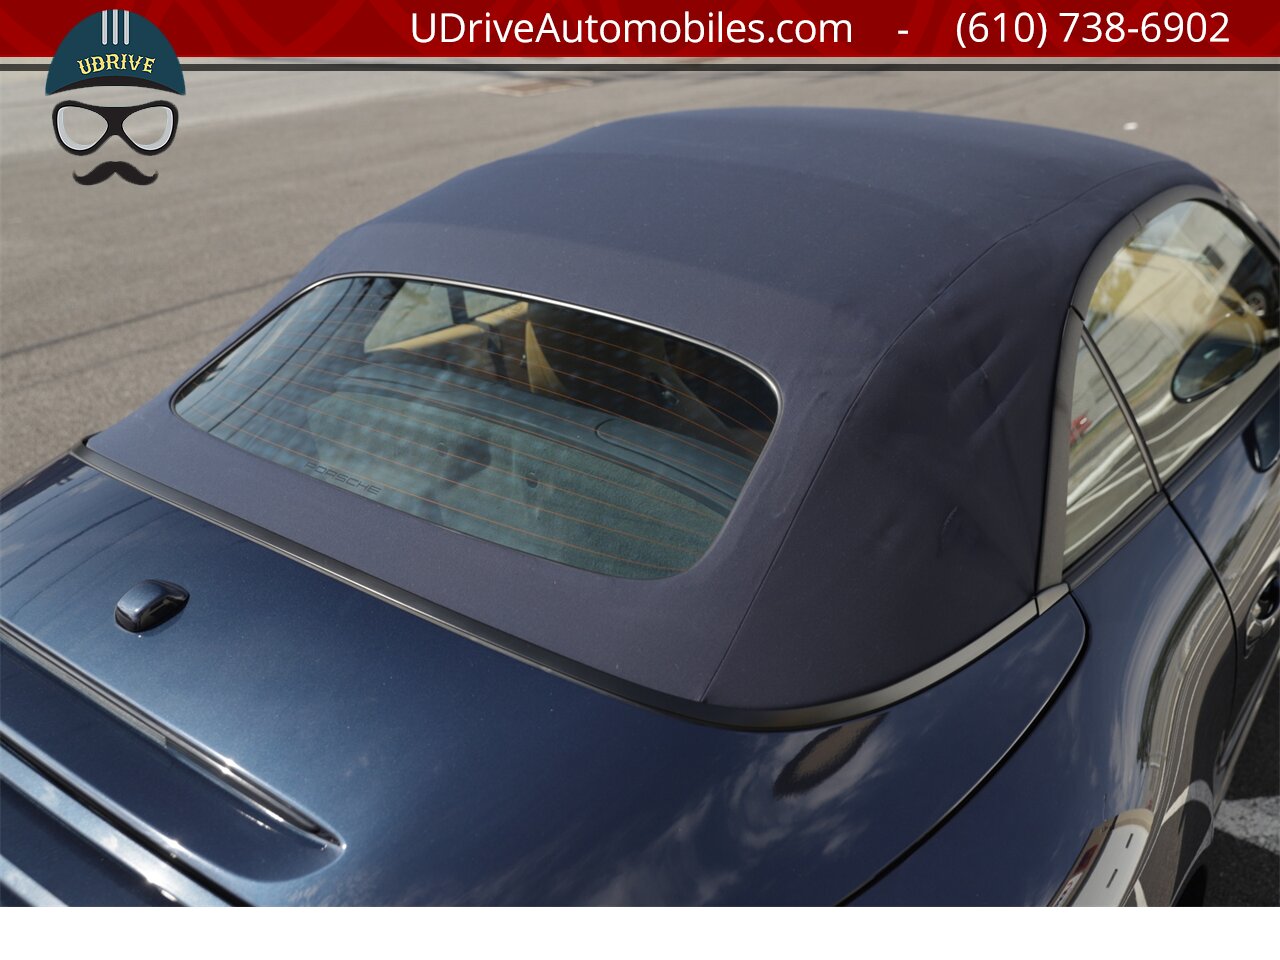 2011 Porsche 911 S 997.2S Cabriolet PDK Rare Color Blue Top  Paddle Shift Chrono Vent Seats Service History - Photo 40 - West Chester, PA 19382